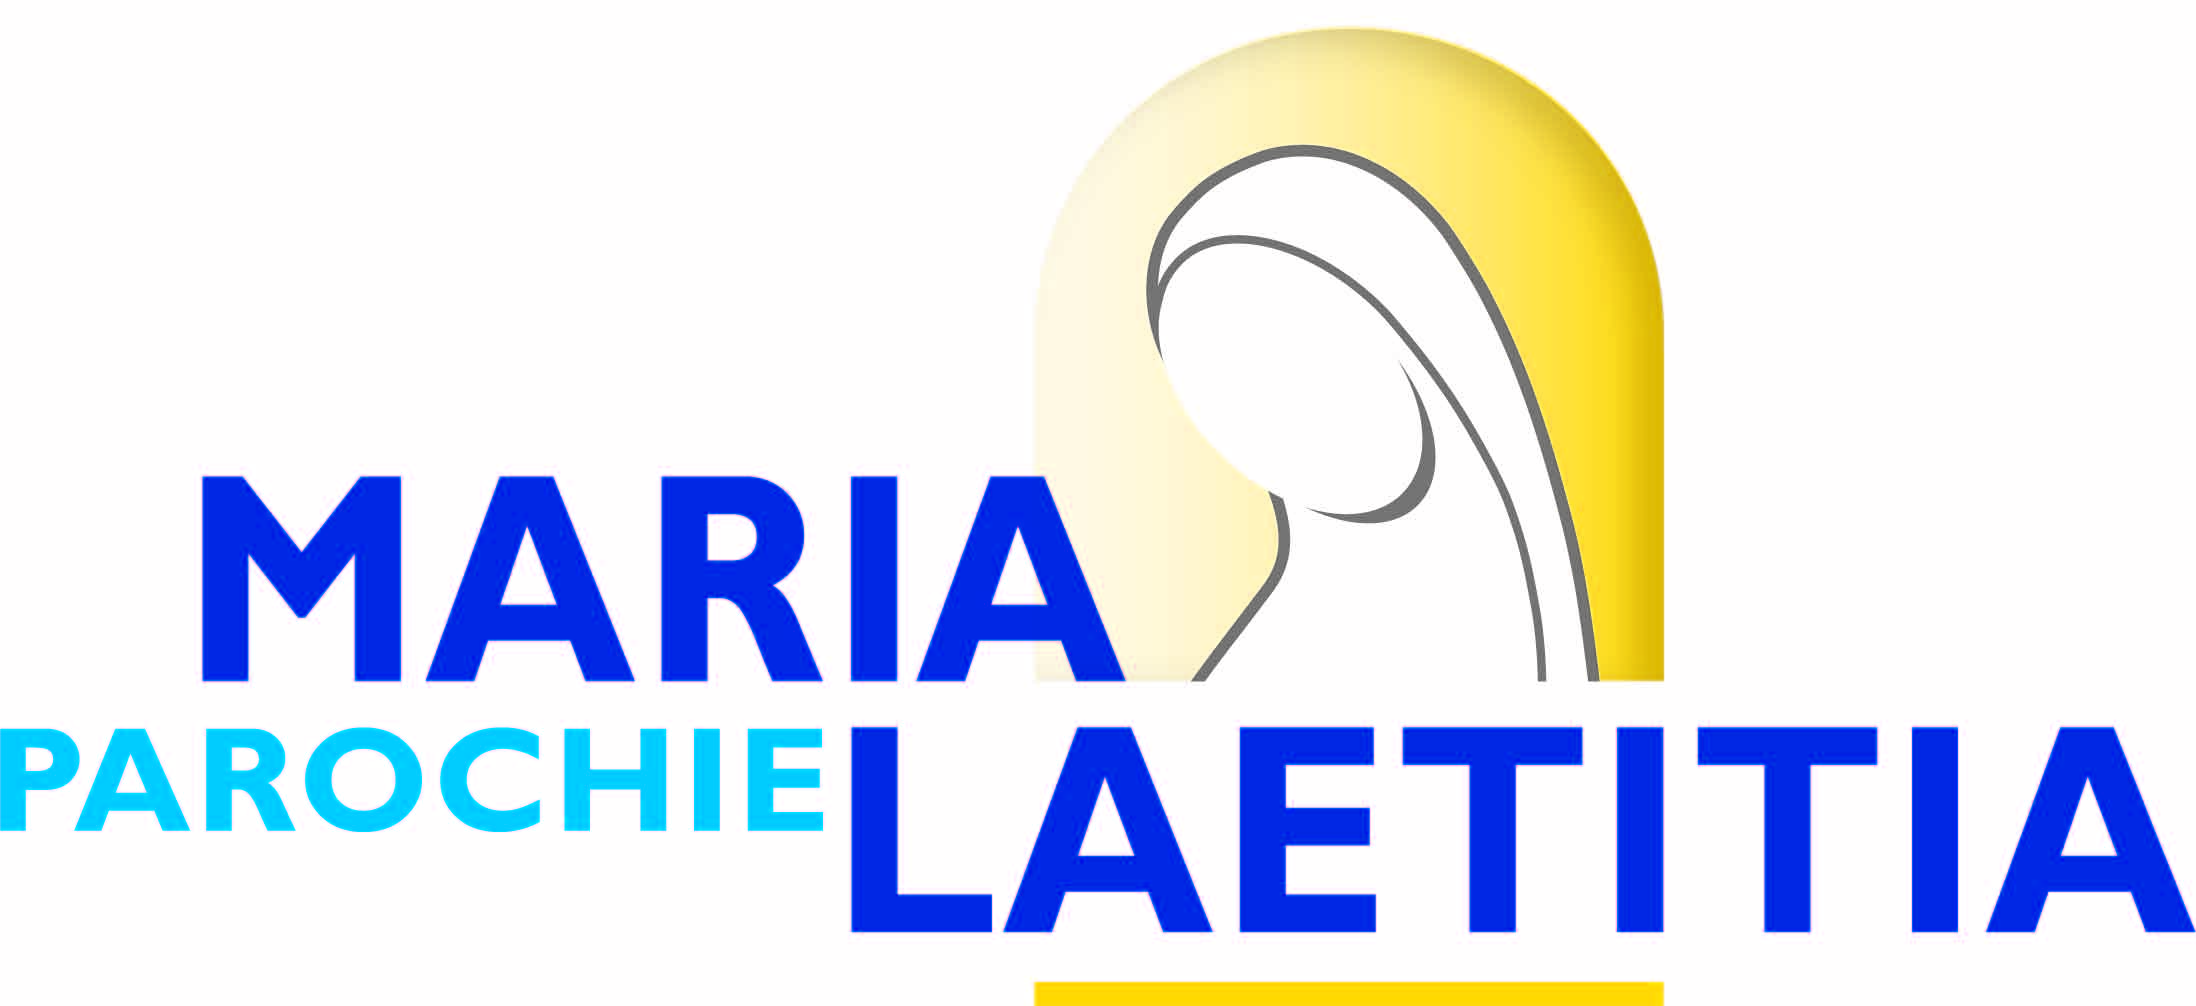 Logo ParochieMariaLaetitia 1